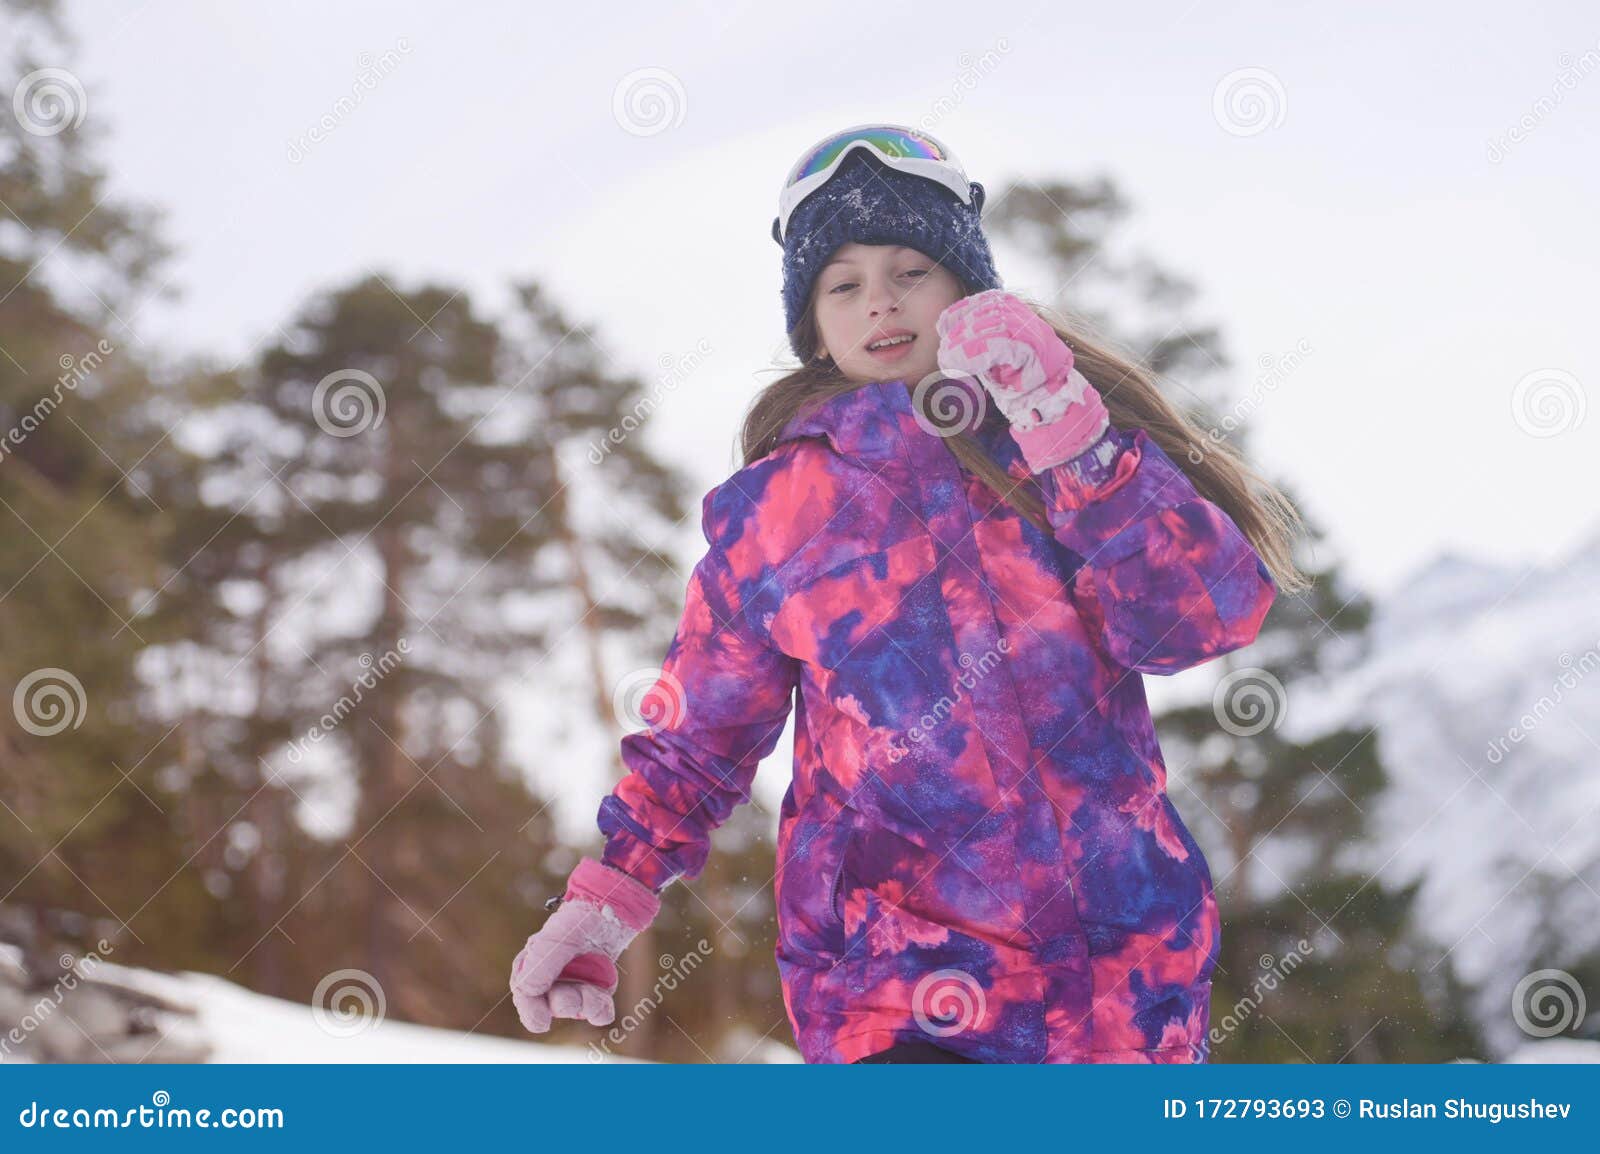 Guantes de esquí snowboard | Roxy| Poppy girl | Junior